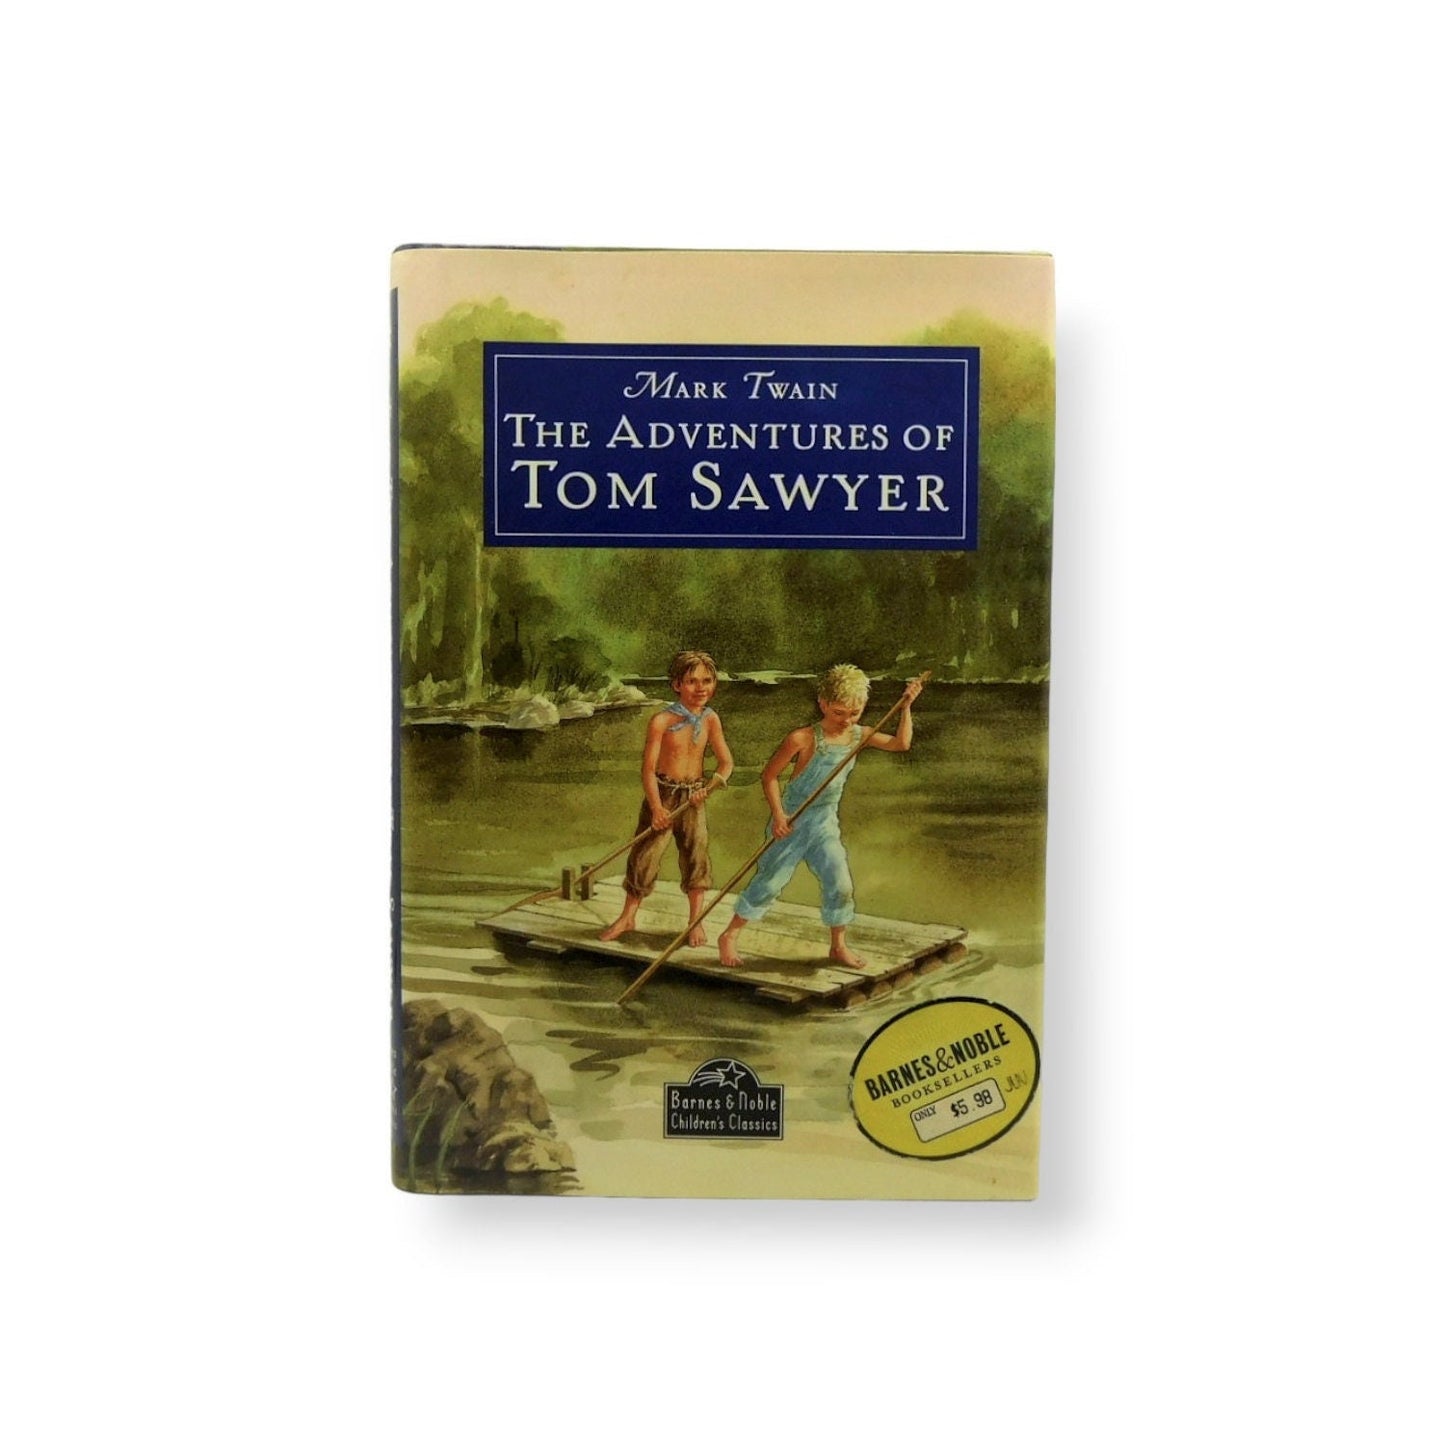 The Adventures of Tom Sawyer by Mark Twain 2001 (Barnes & Noble Children's Classics)